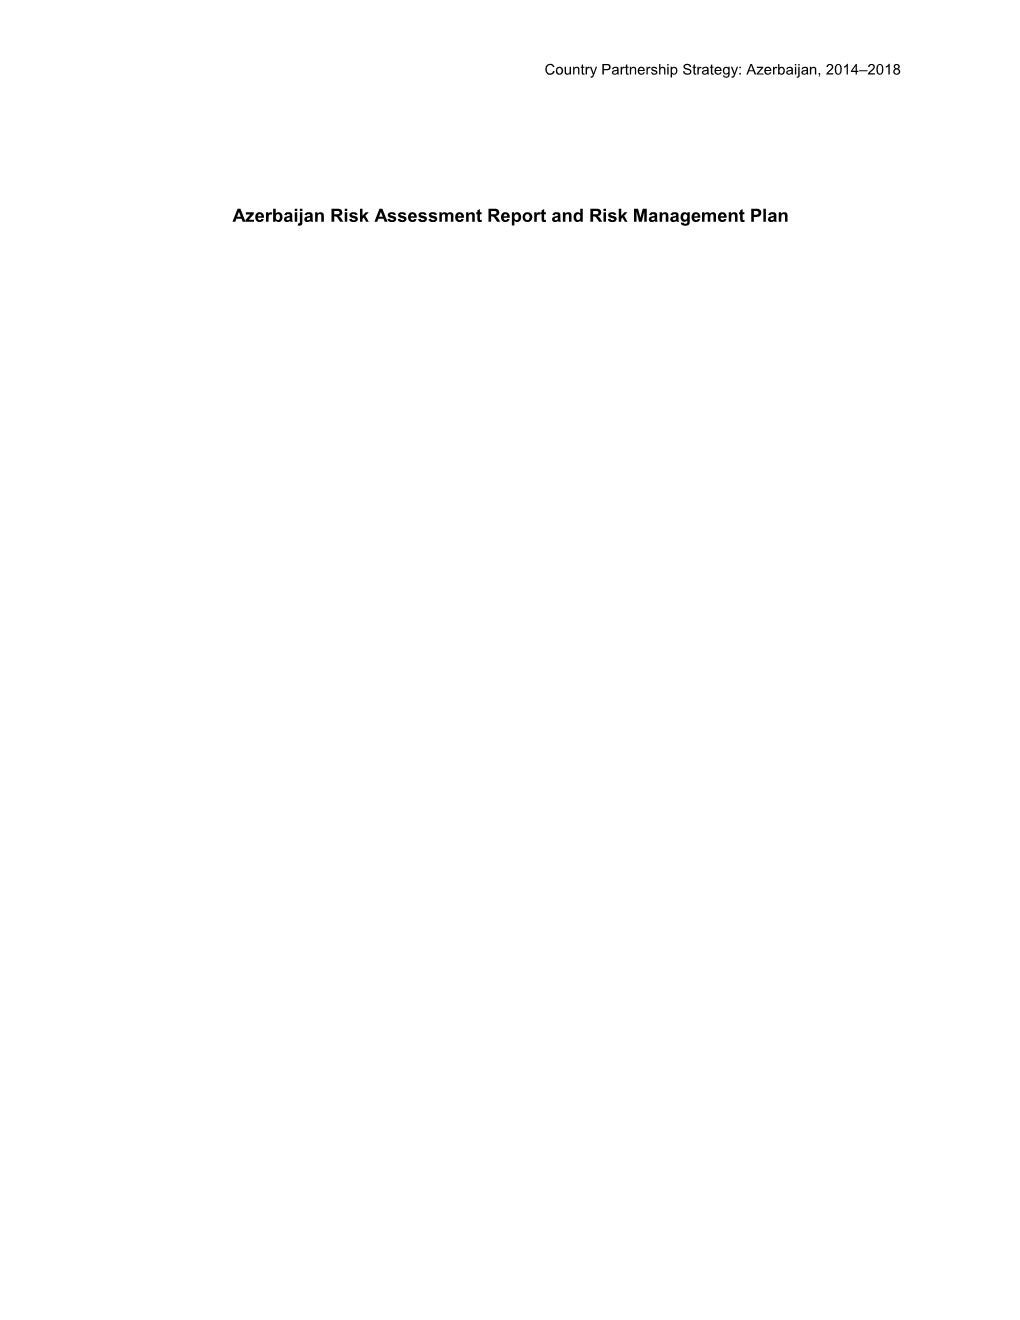 Azerbaijan Risk Assessment Report and Risk Management Plan